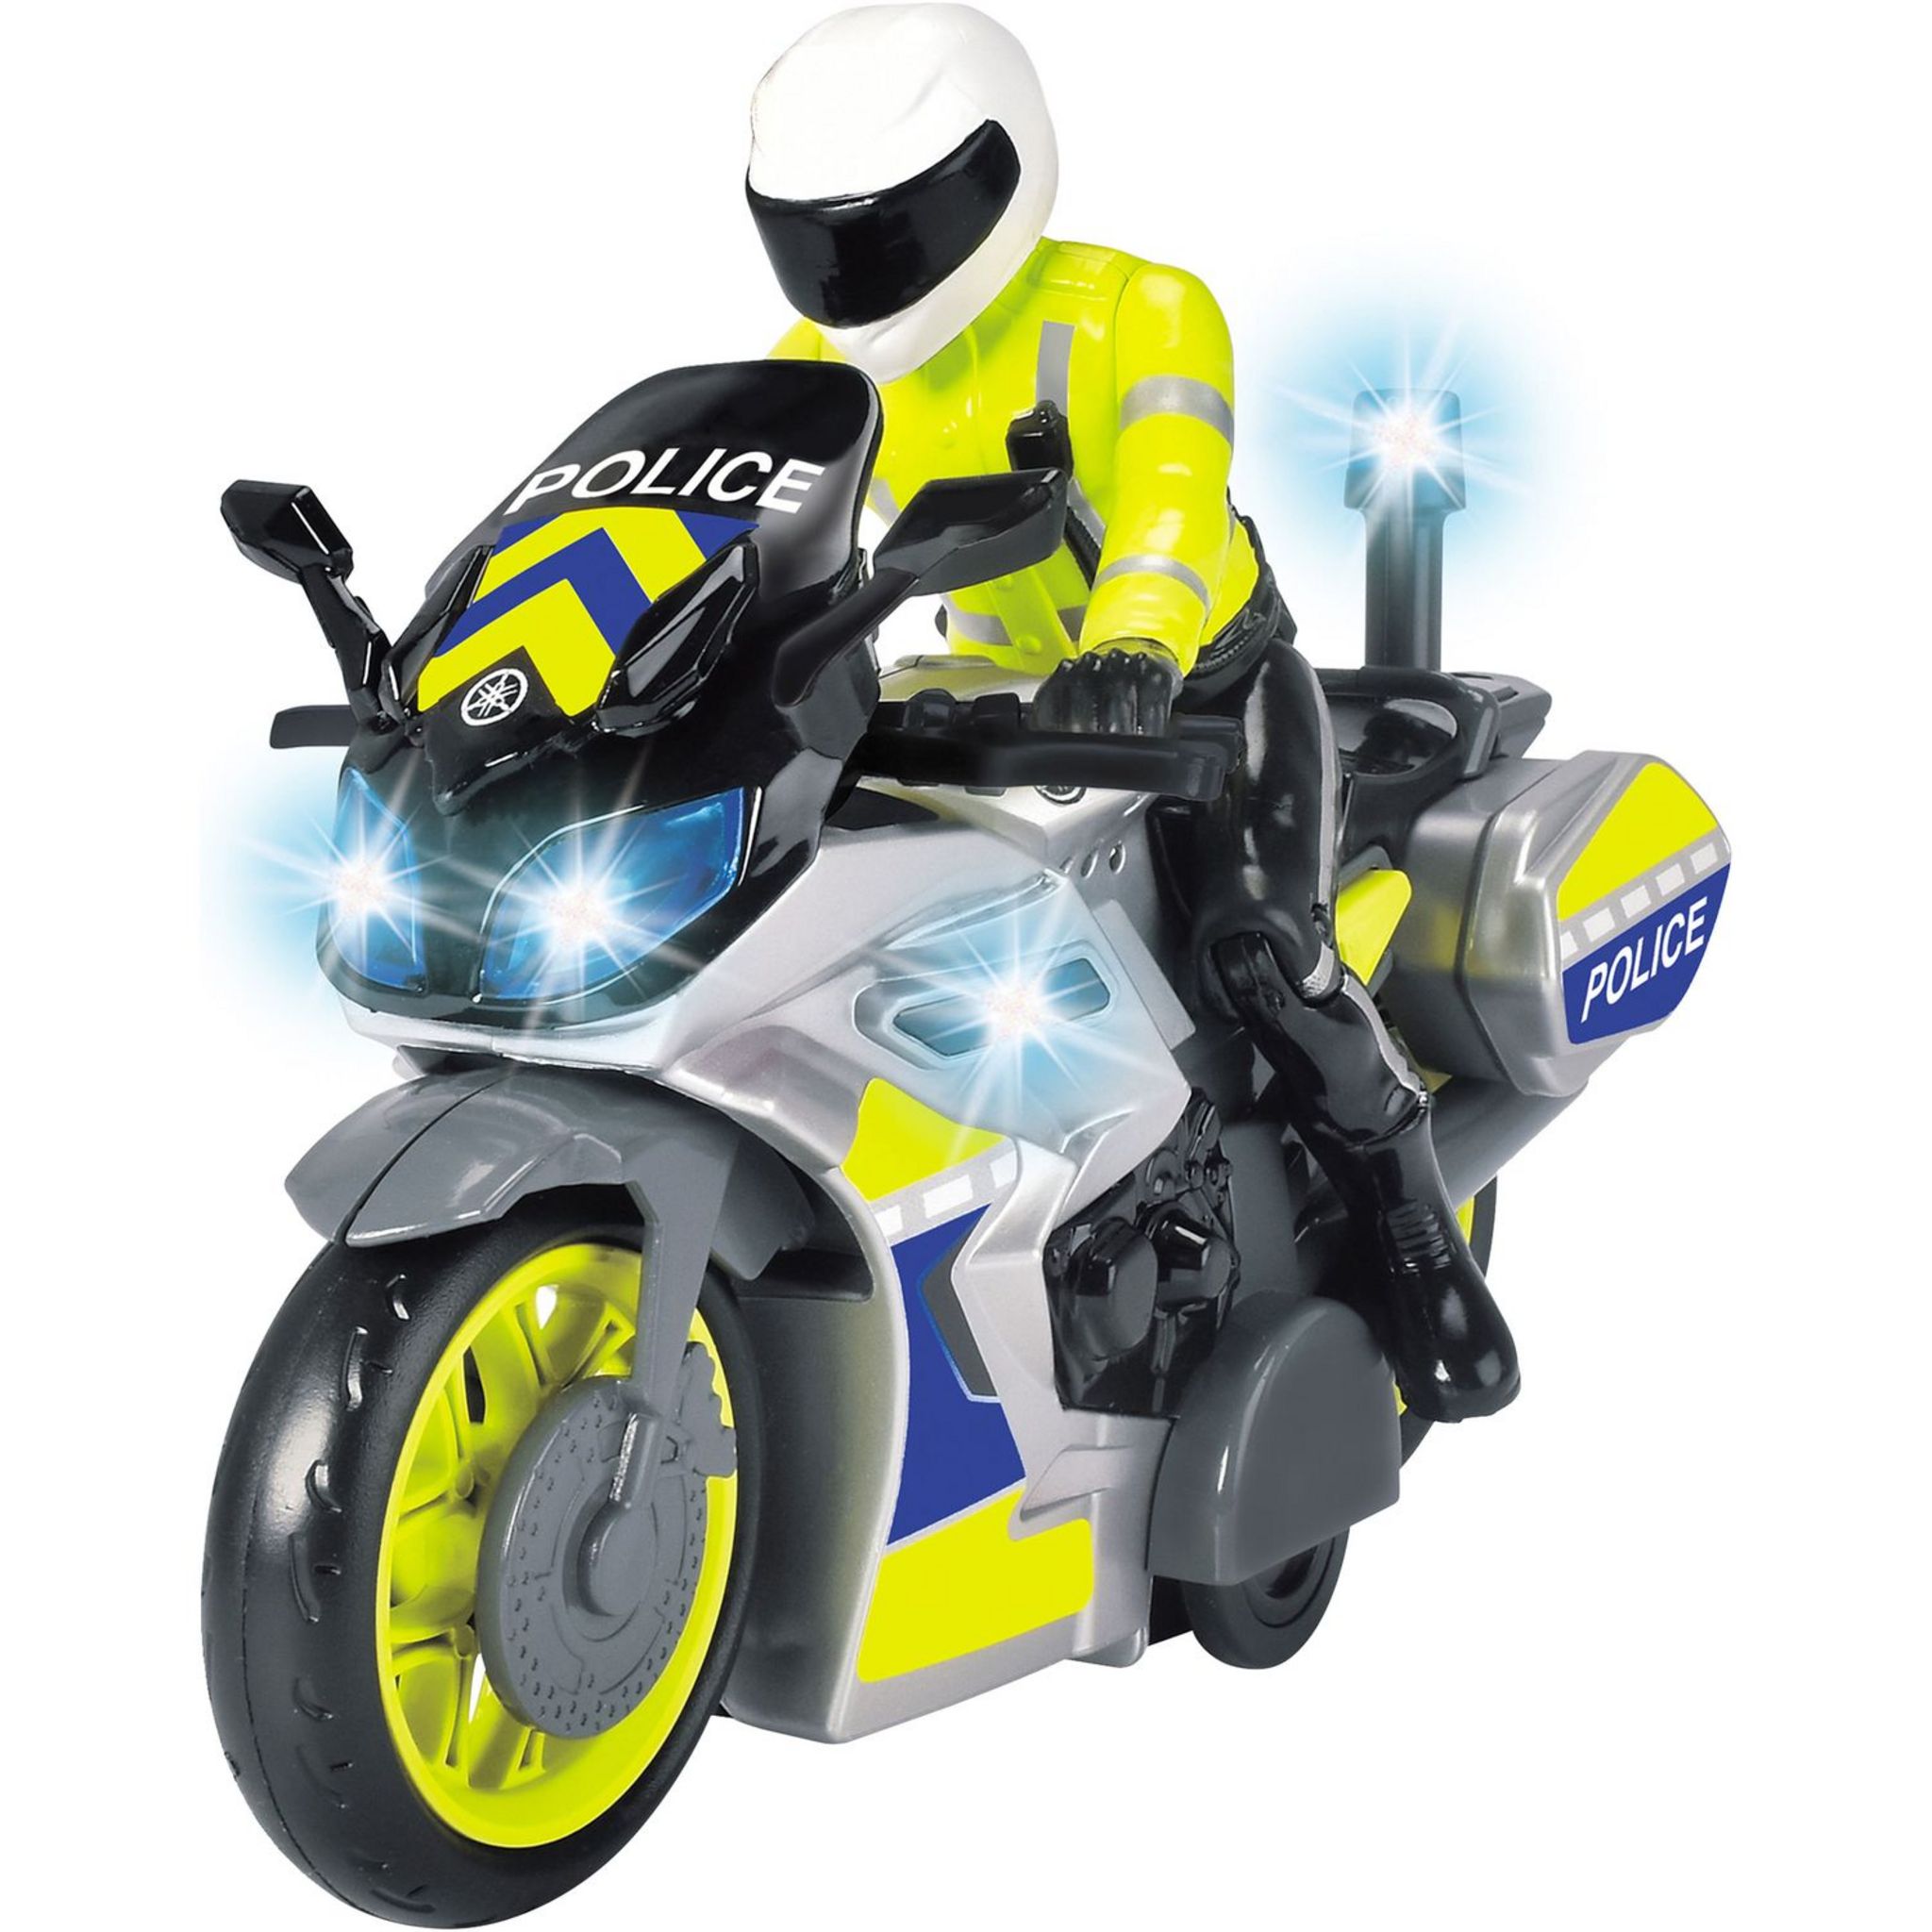 Police Jouet Moto De Police Musicale Et Lumineuse - Prix pas cher